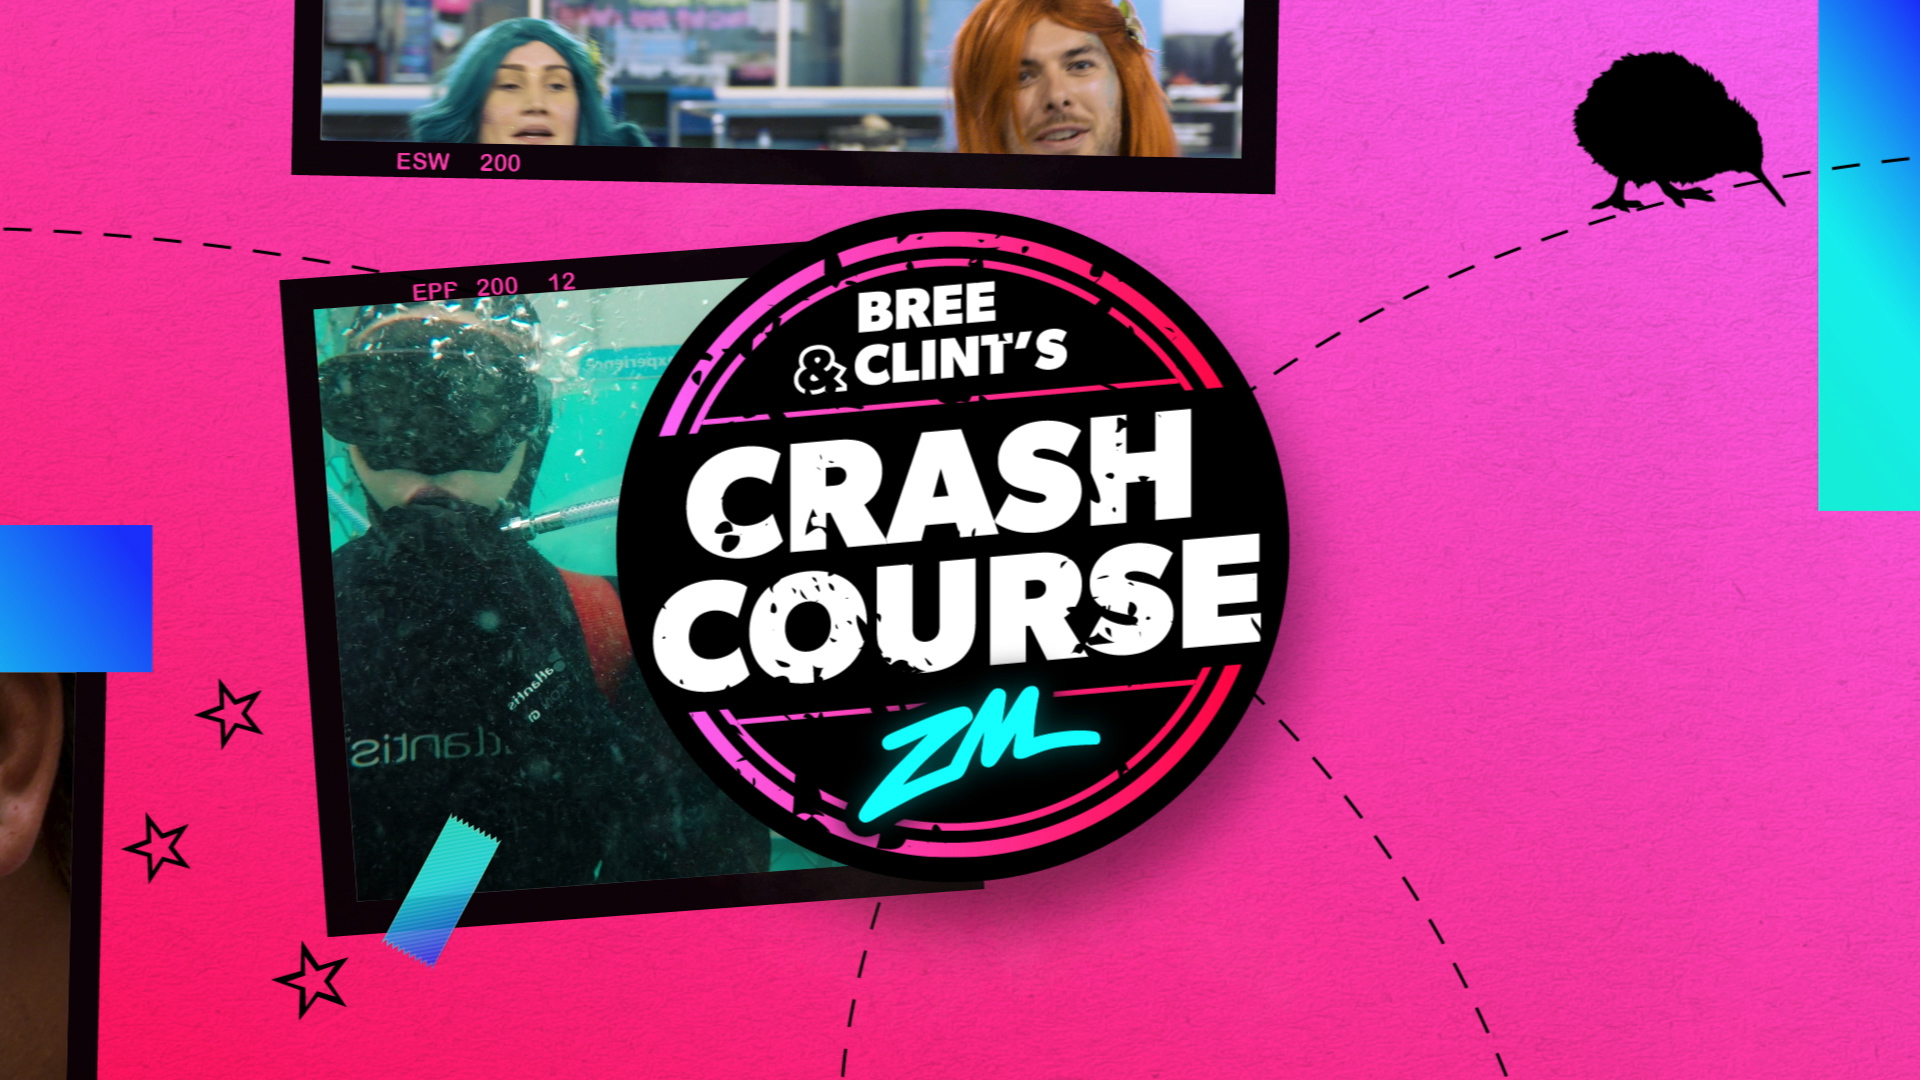 Bree & Clint's Crash Course